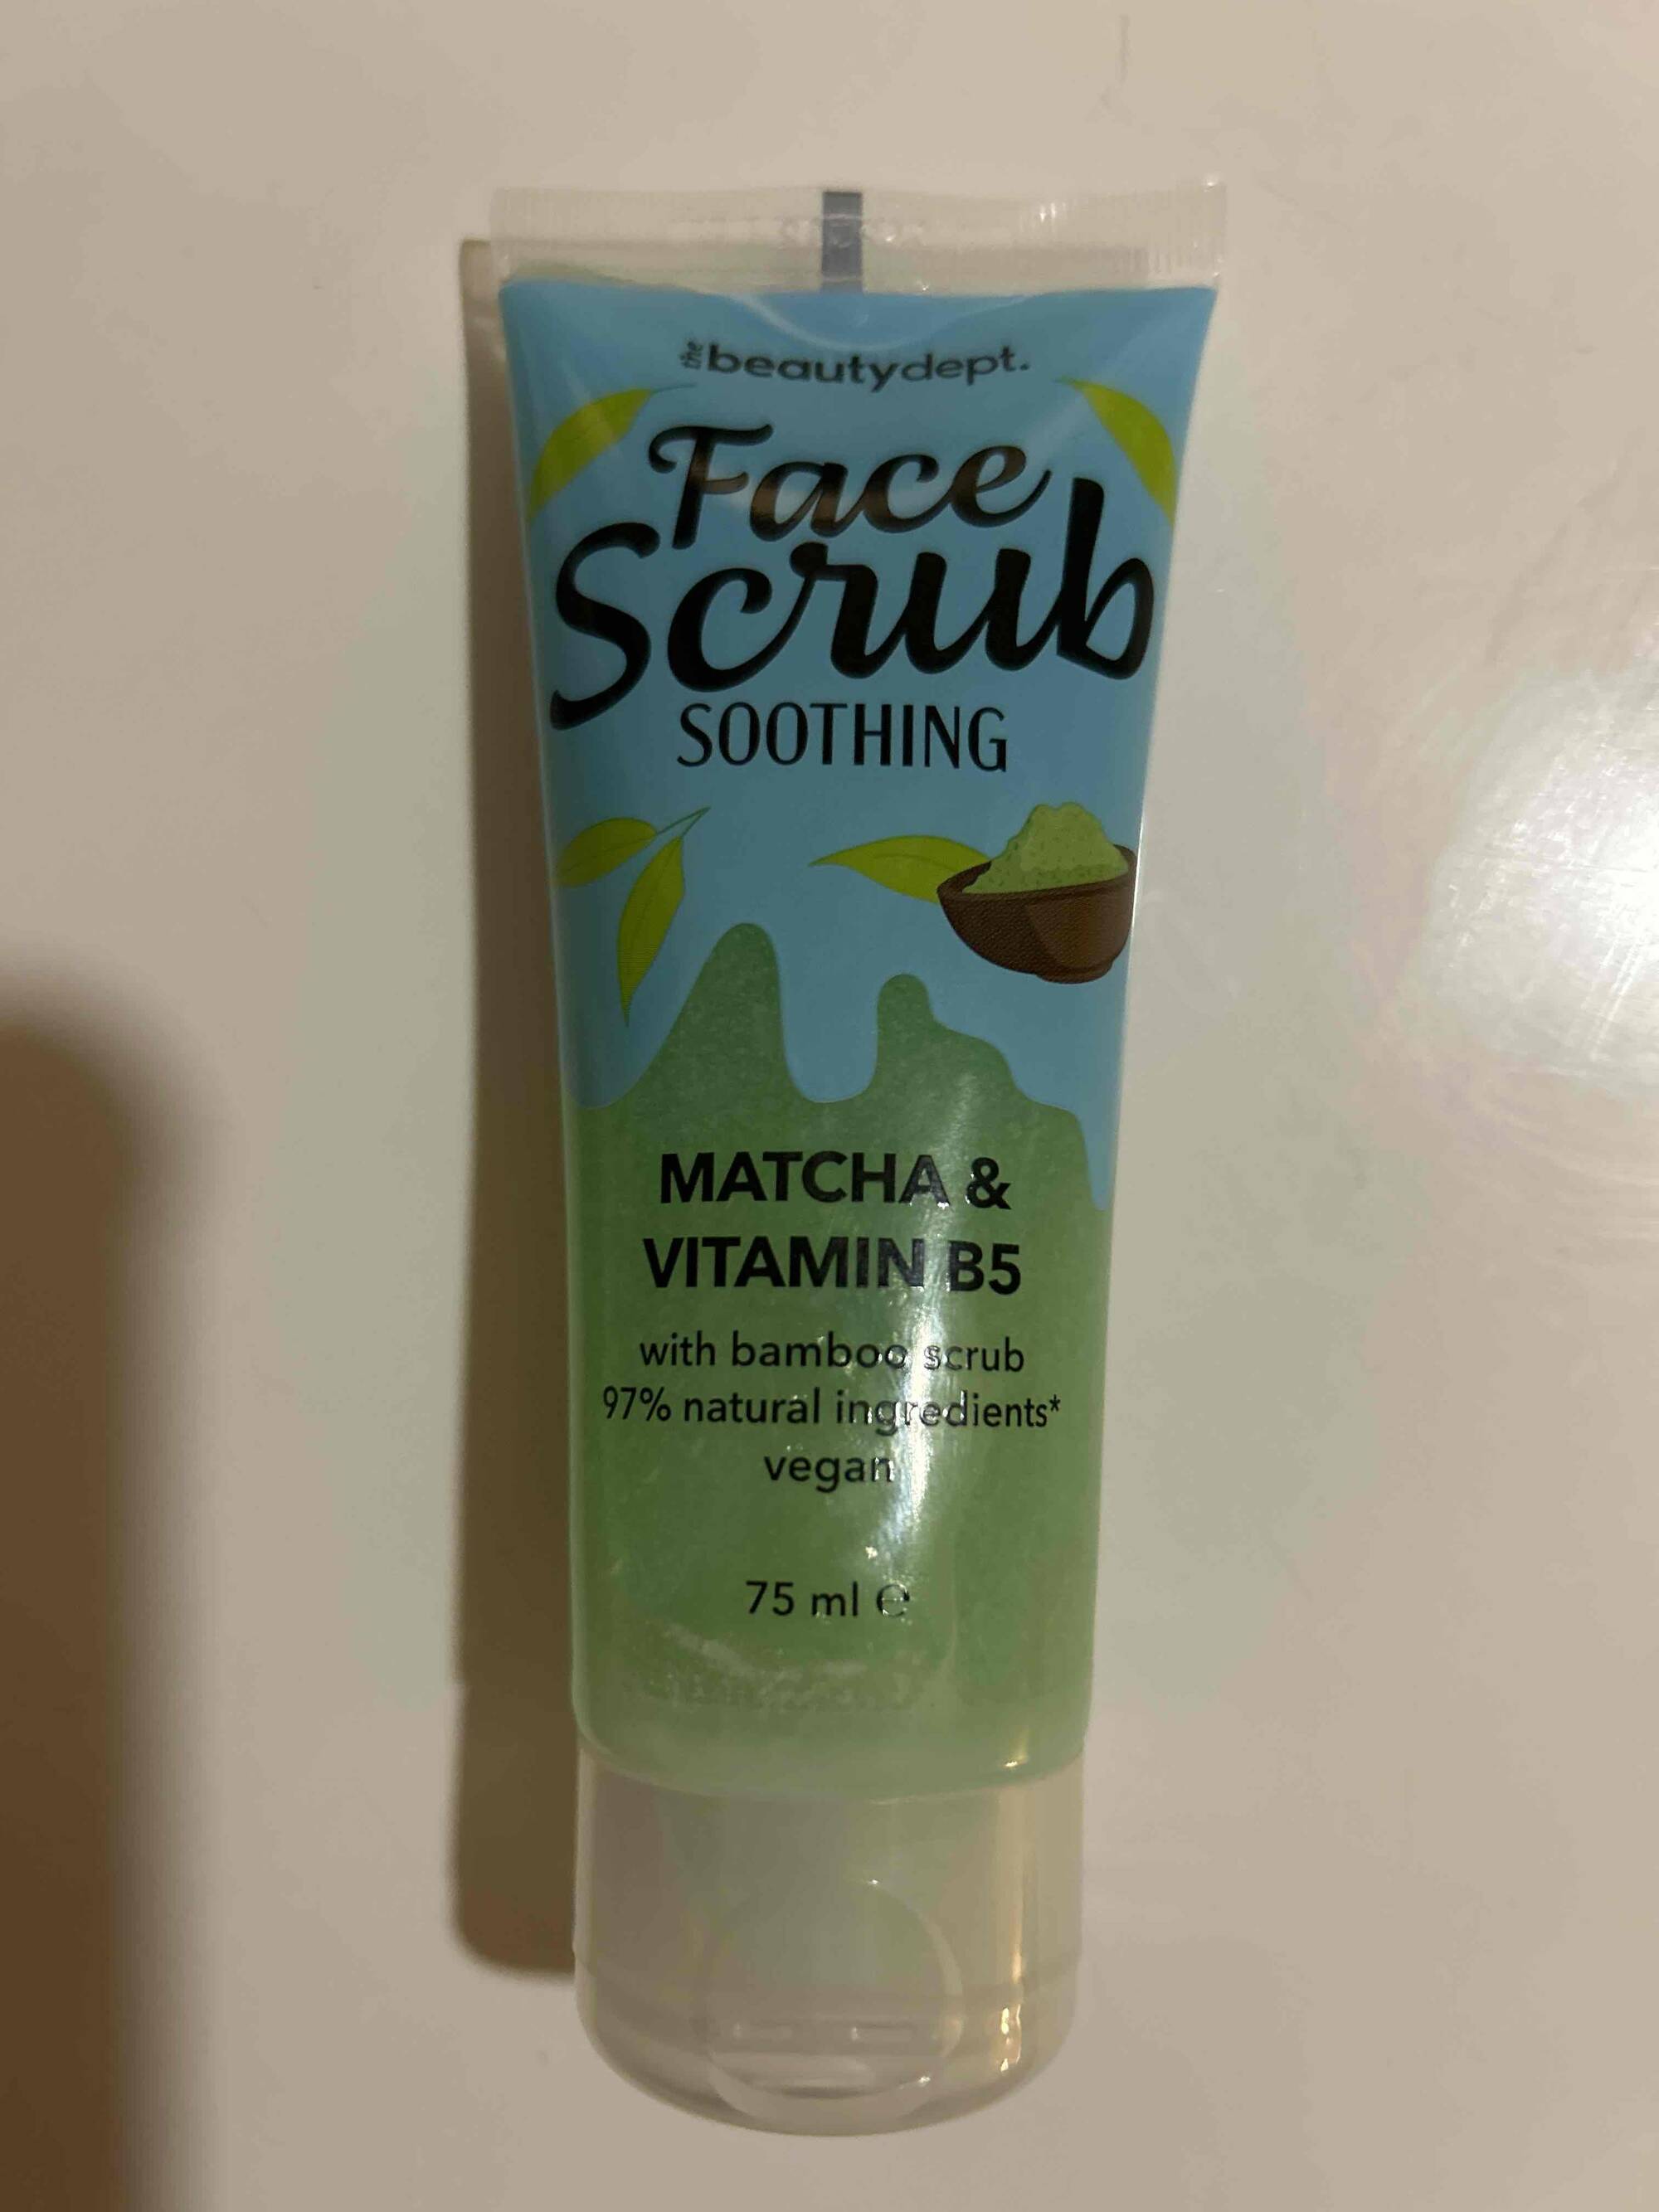 THE BEAUTY DEPT - Matcha & vitamin B5 - Face scrub soothing